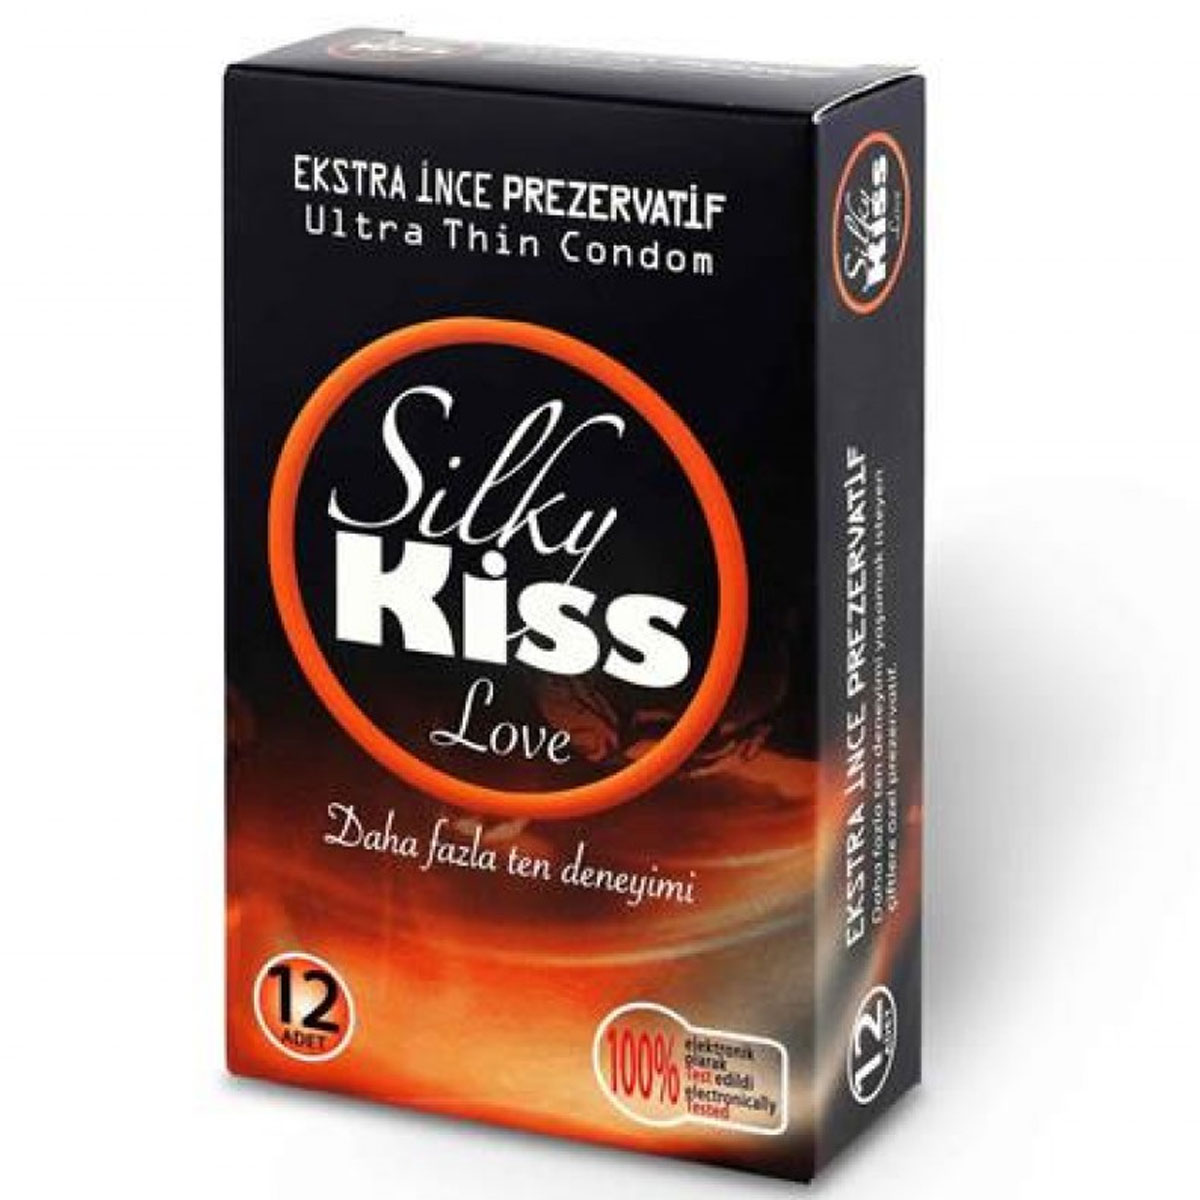 Silky Kiss Ultra İnce Prezervatif C-1572